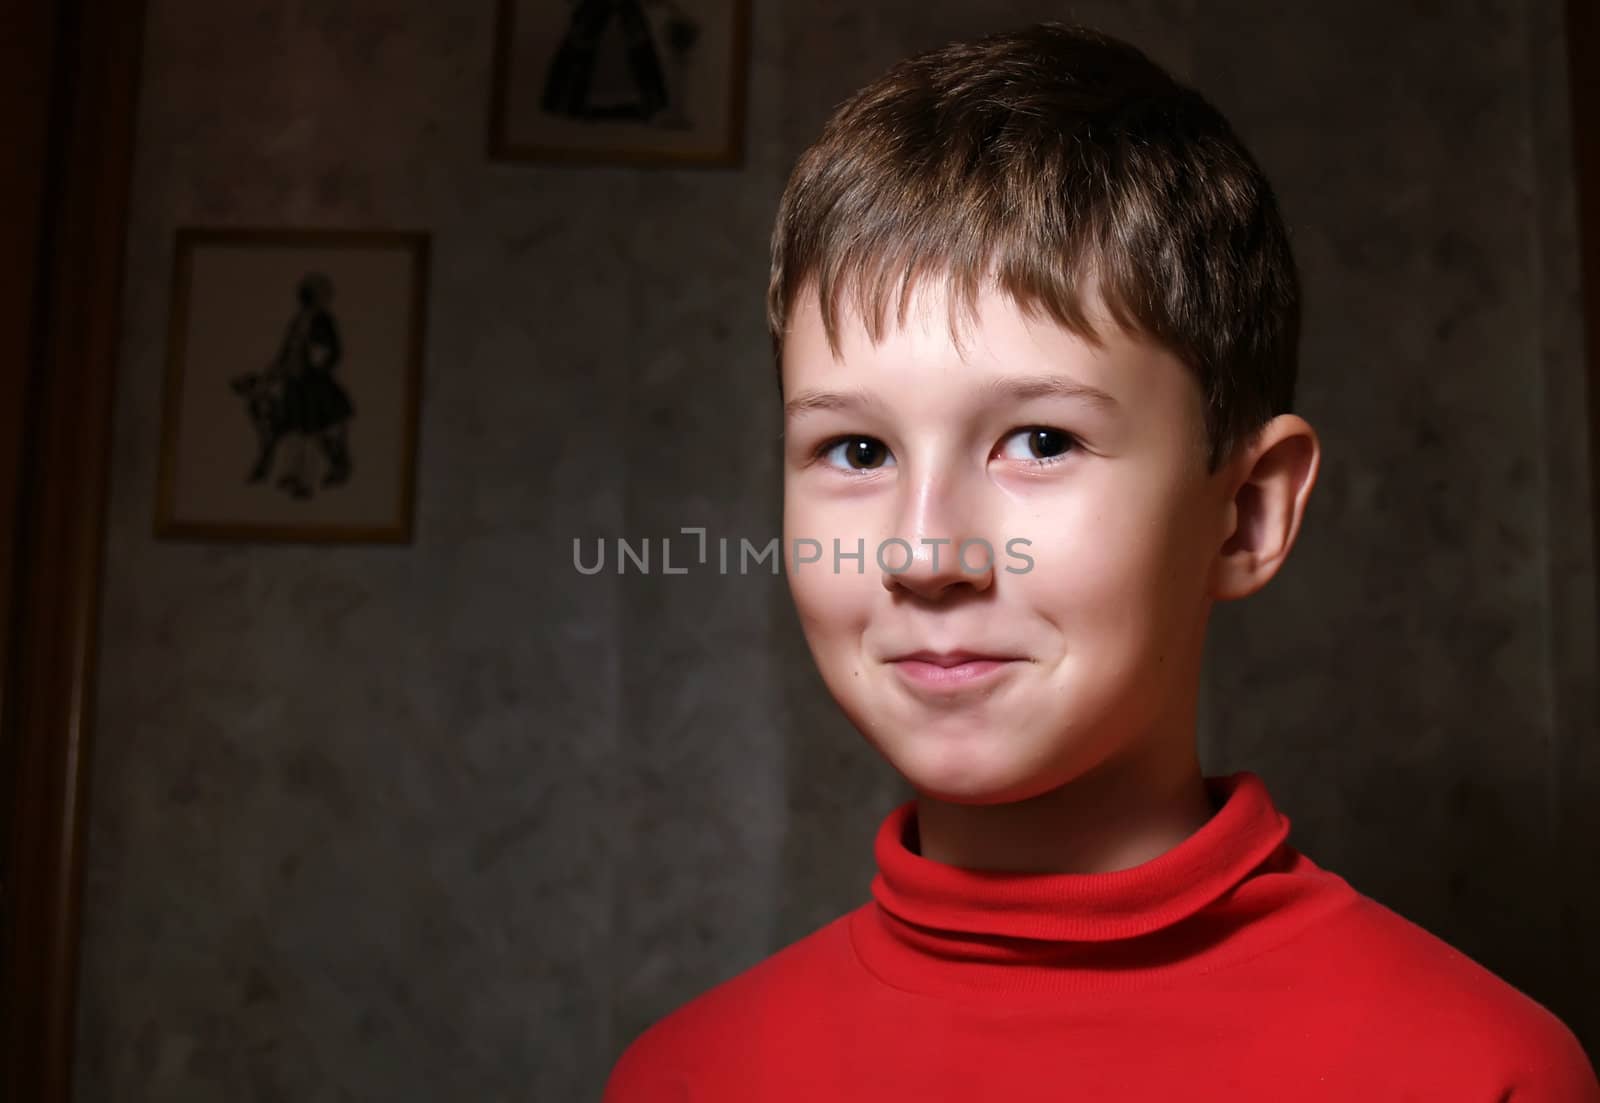 Smiling little boy in dark room